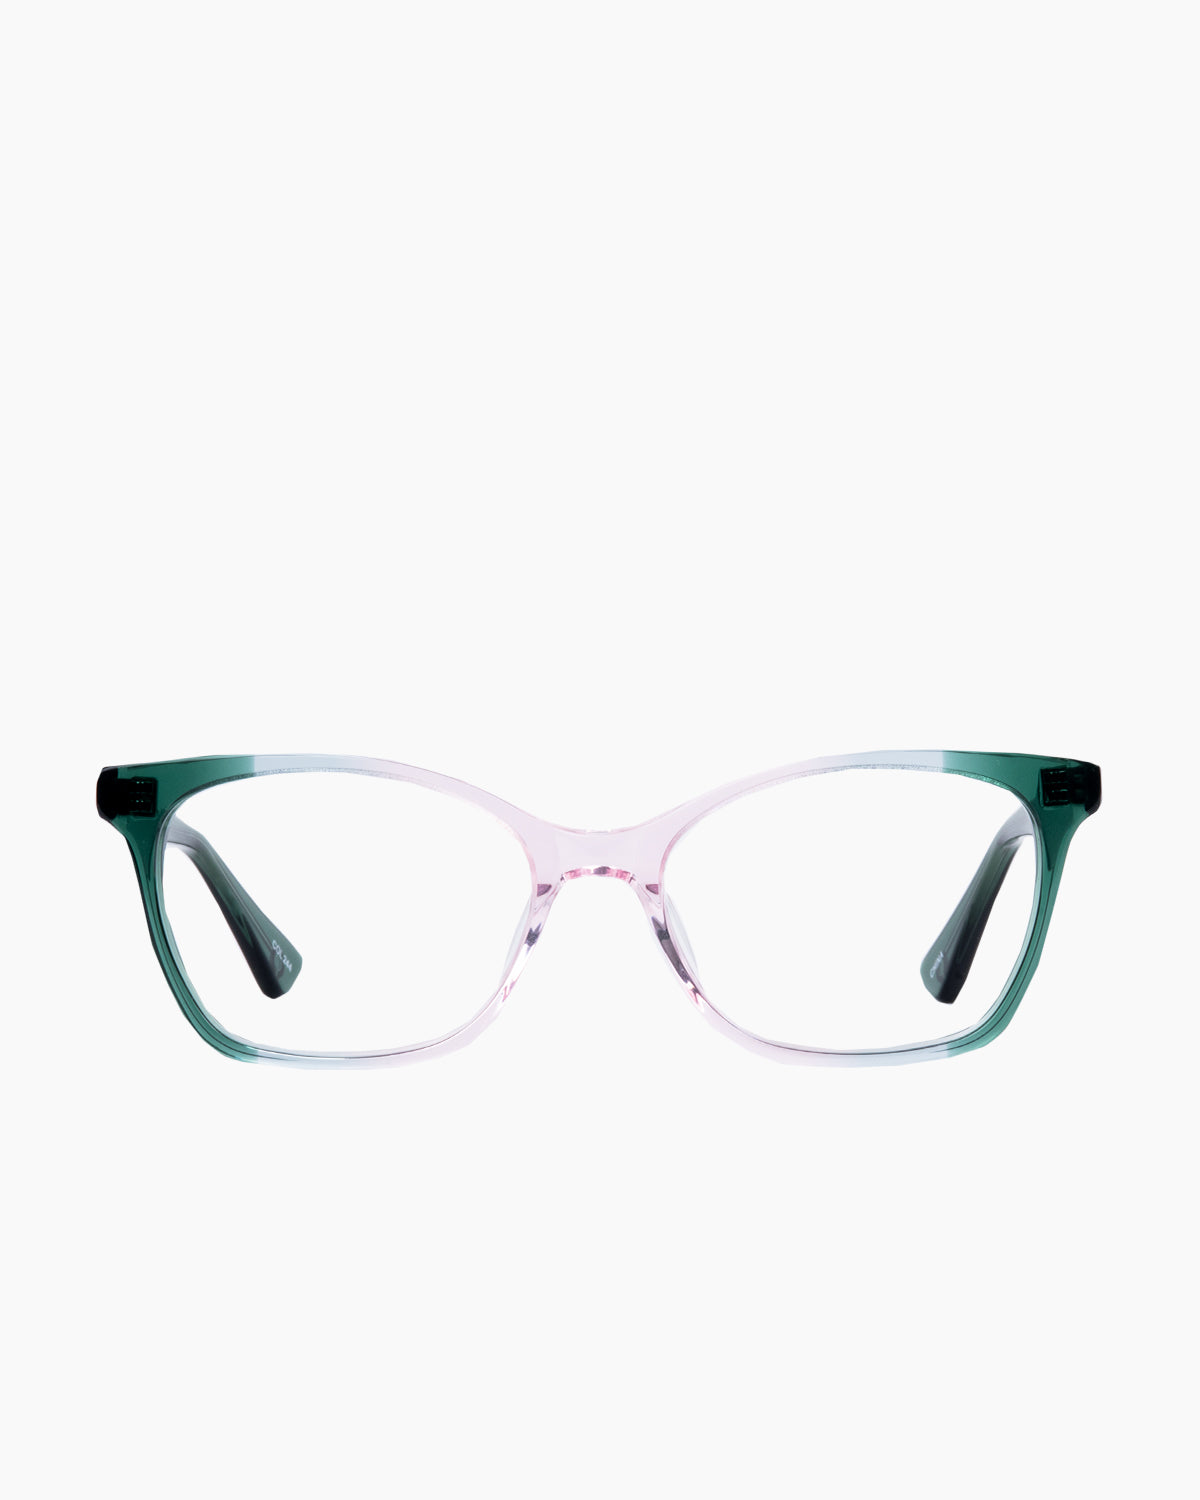 Evolve - Sophia - 244 | Bar à lunettes:  Marie-Sophie Dion